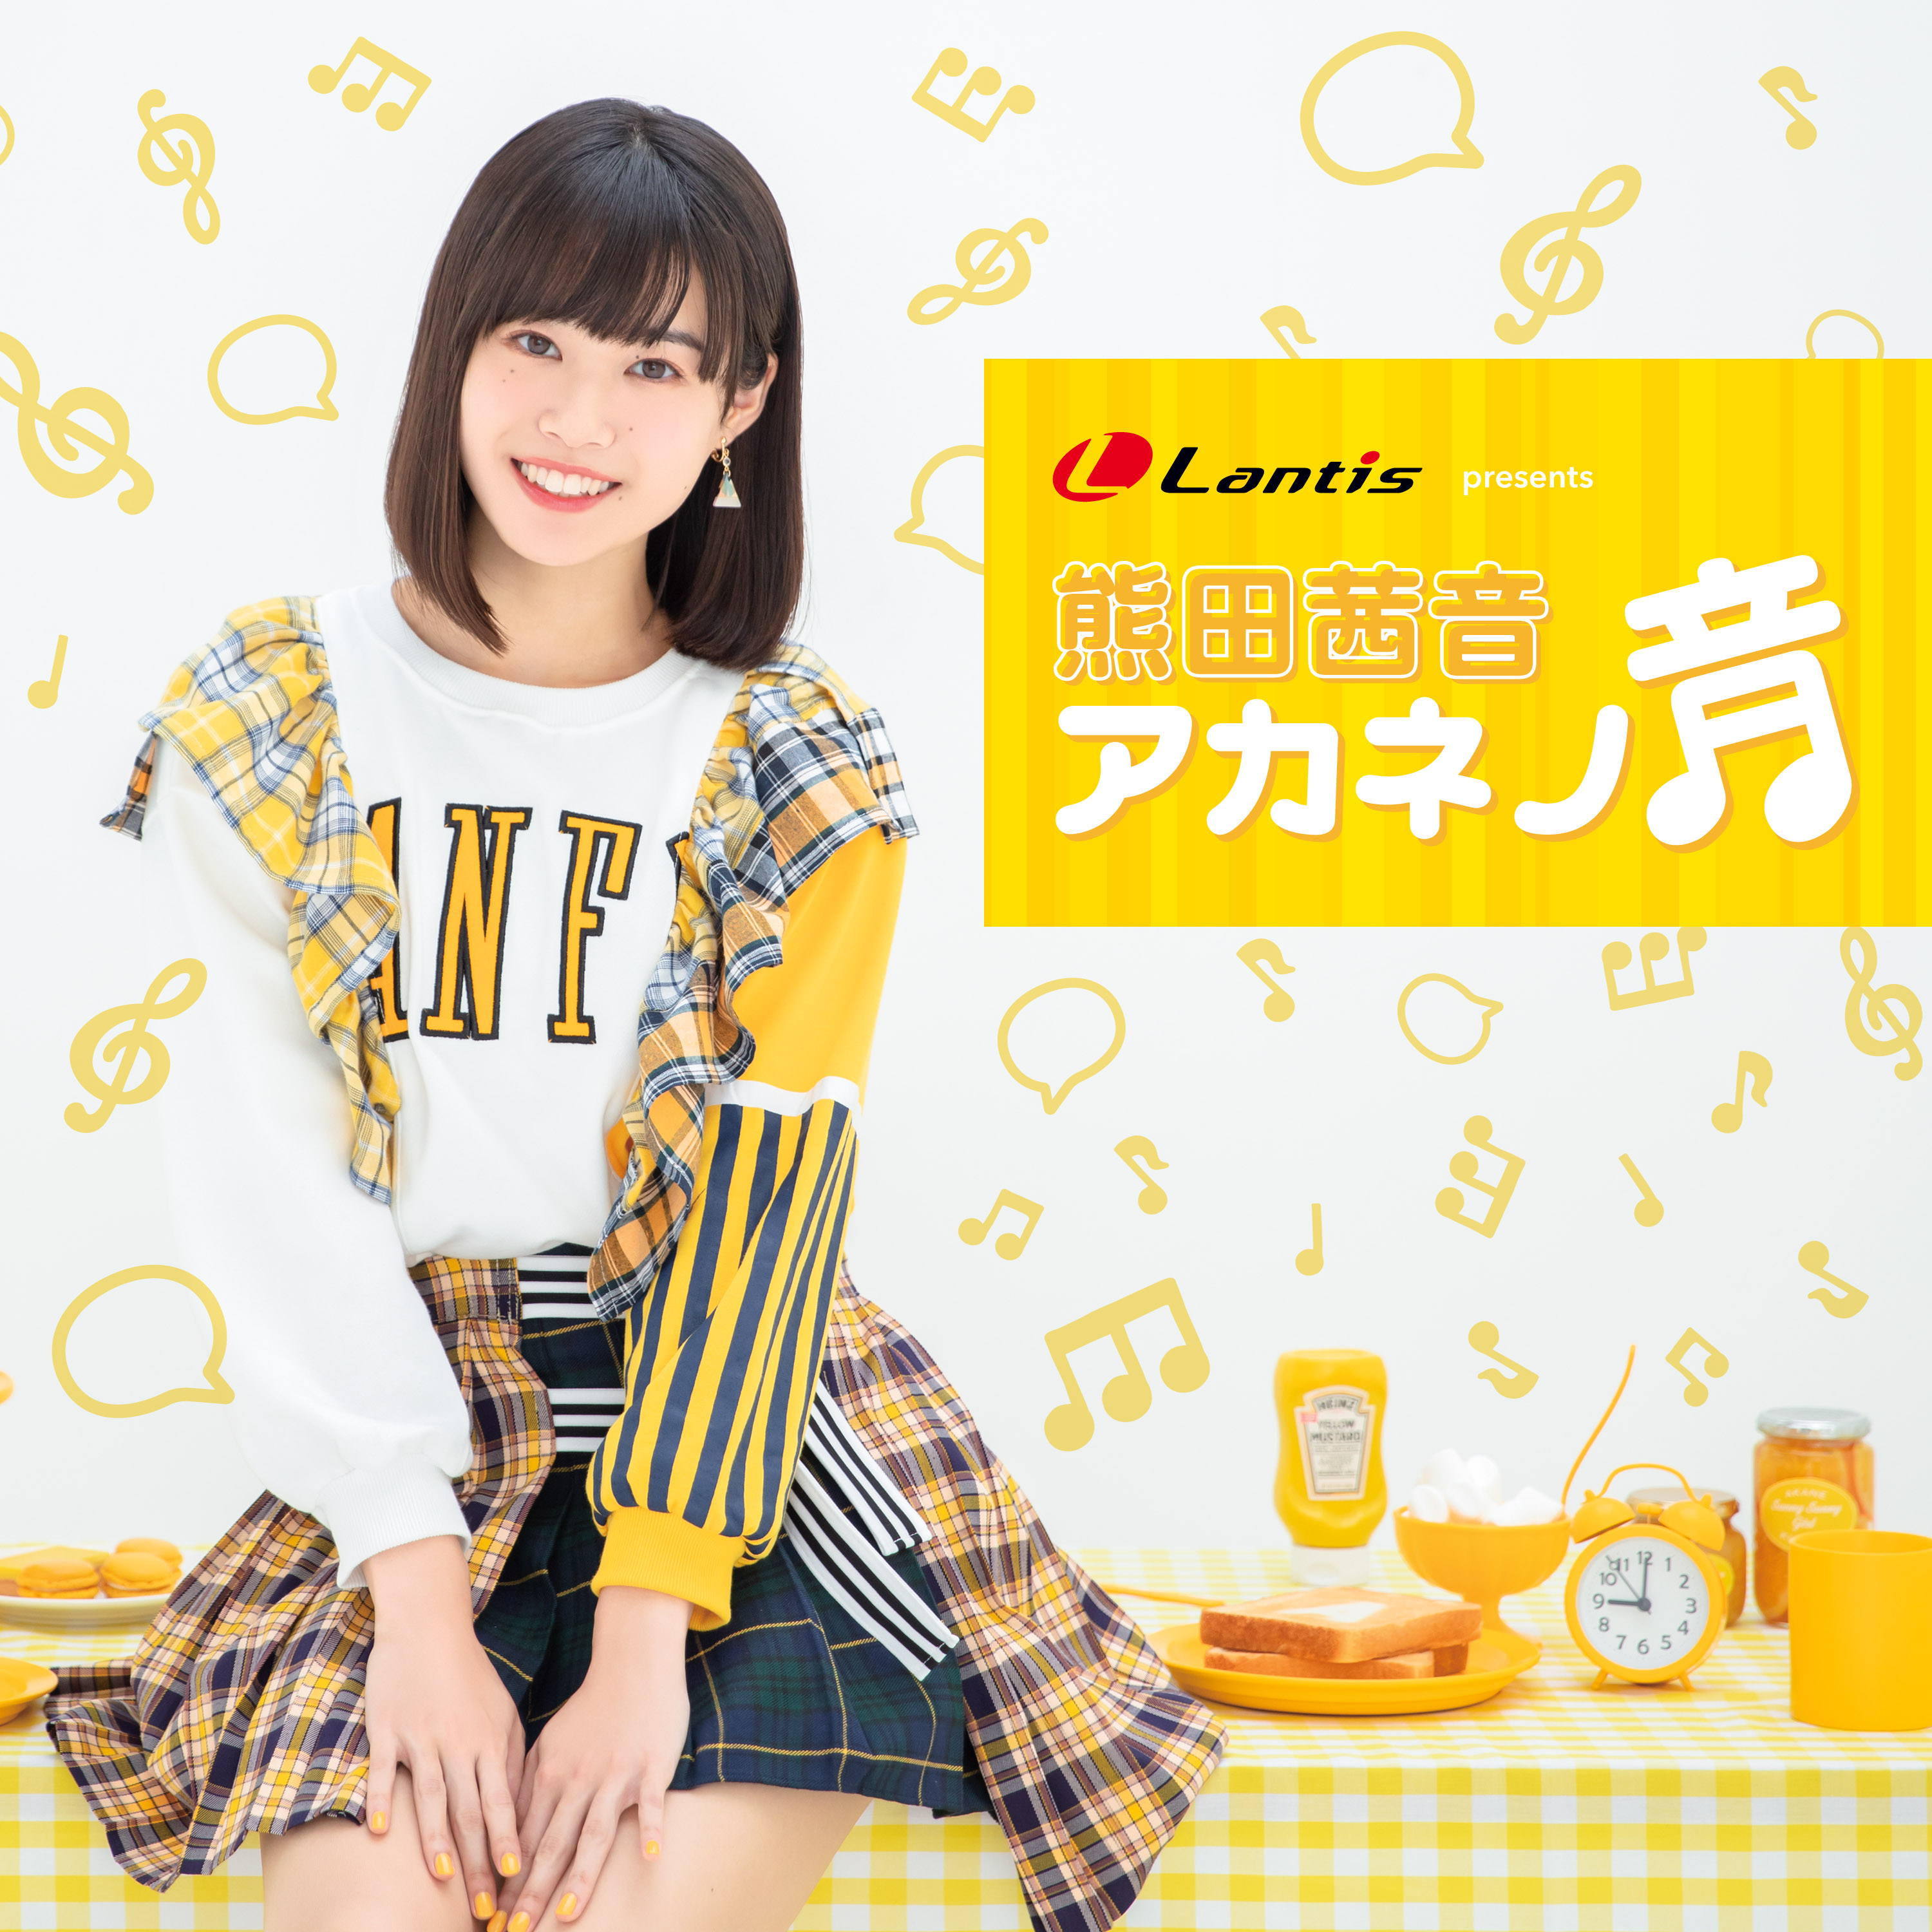 Lantis Presents 熊田茜音 アカネノ音 #291-294